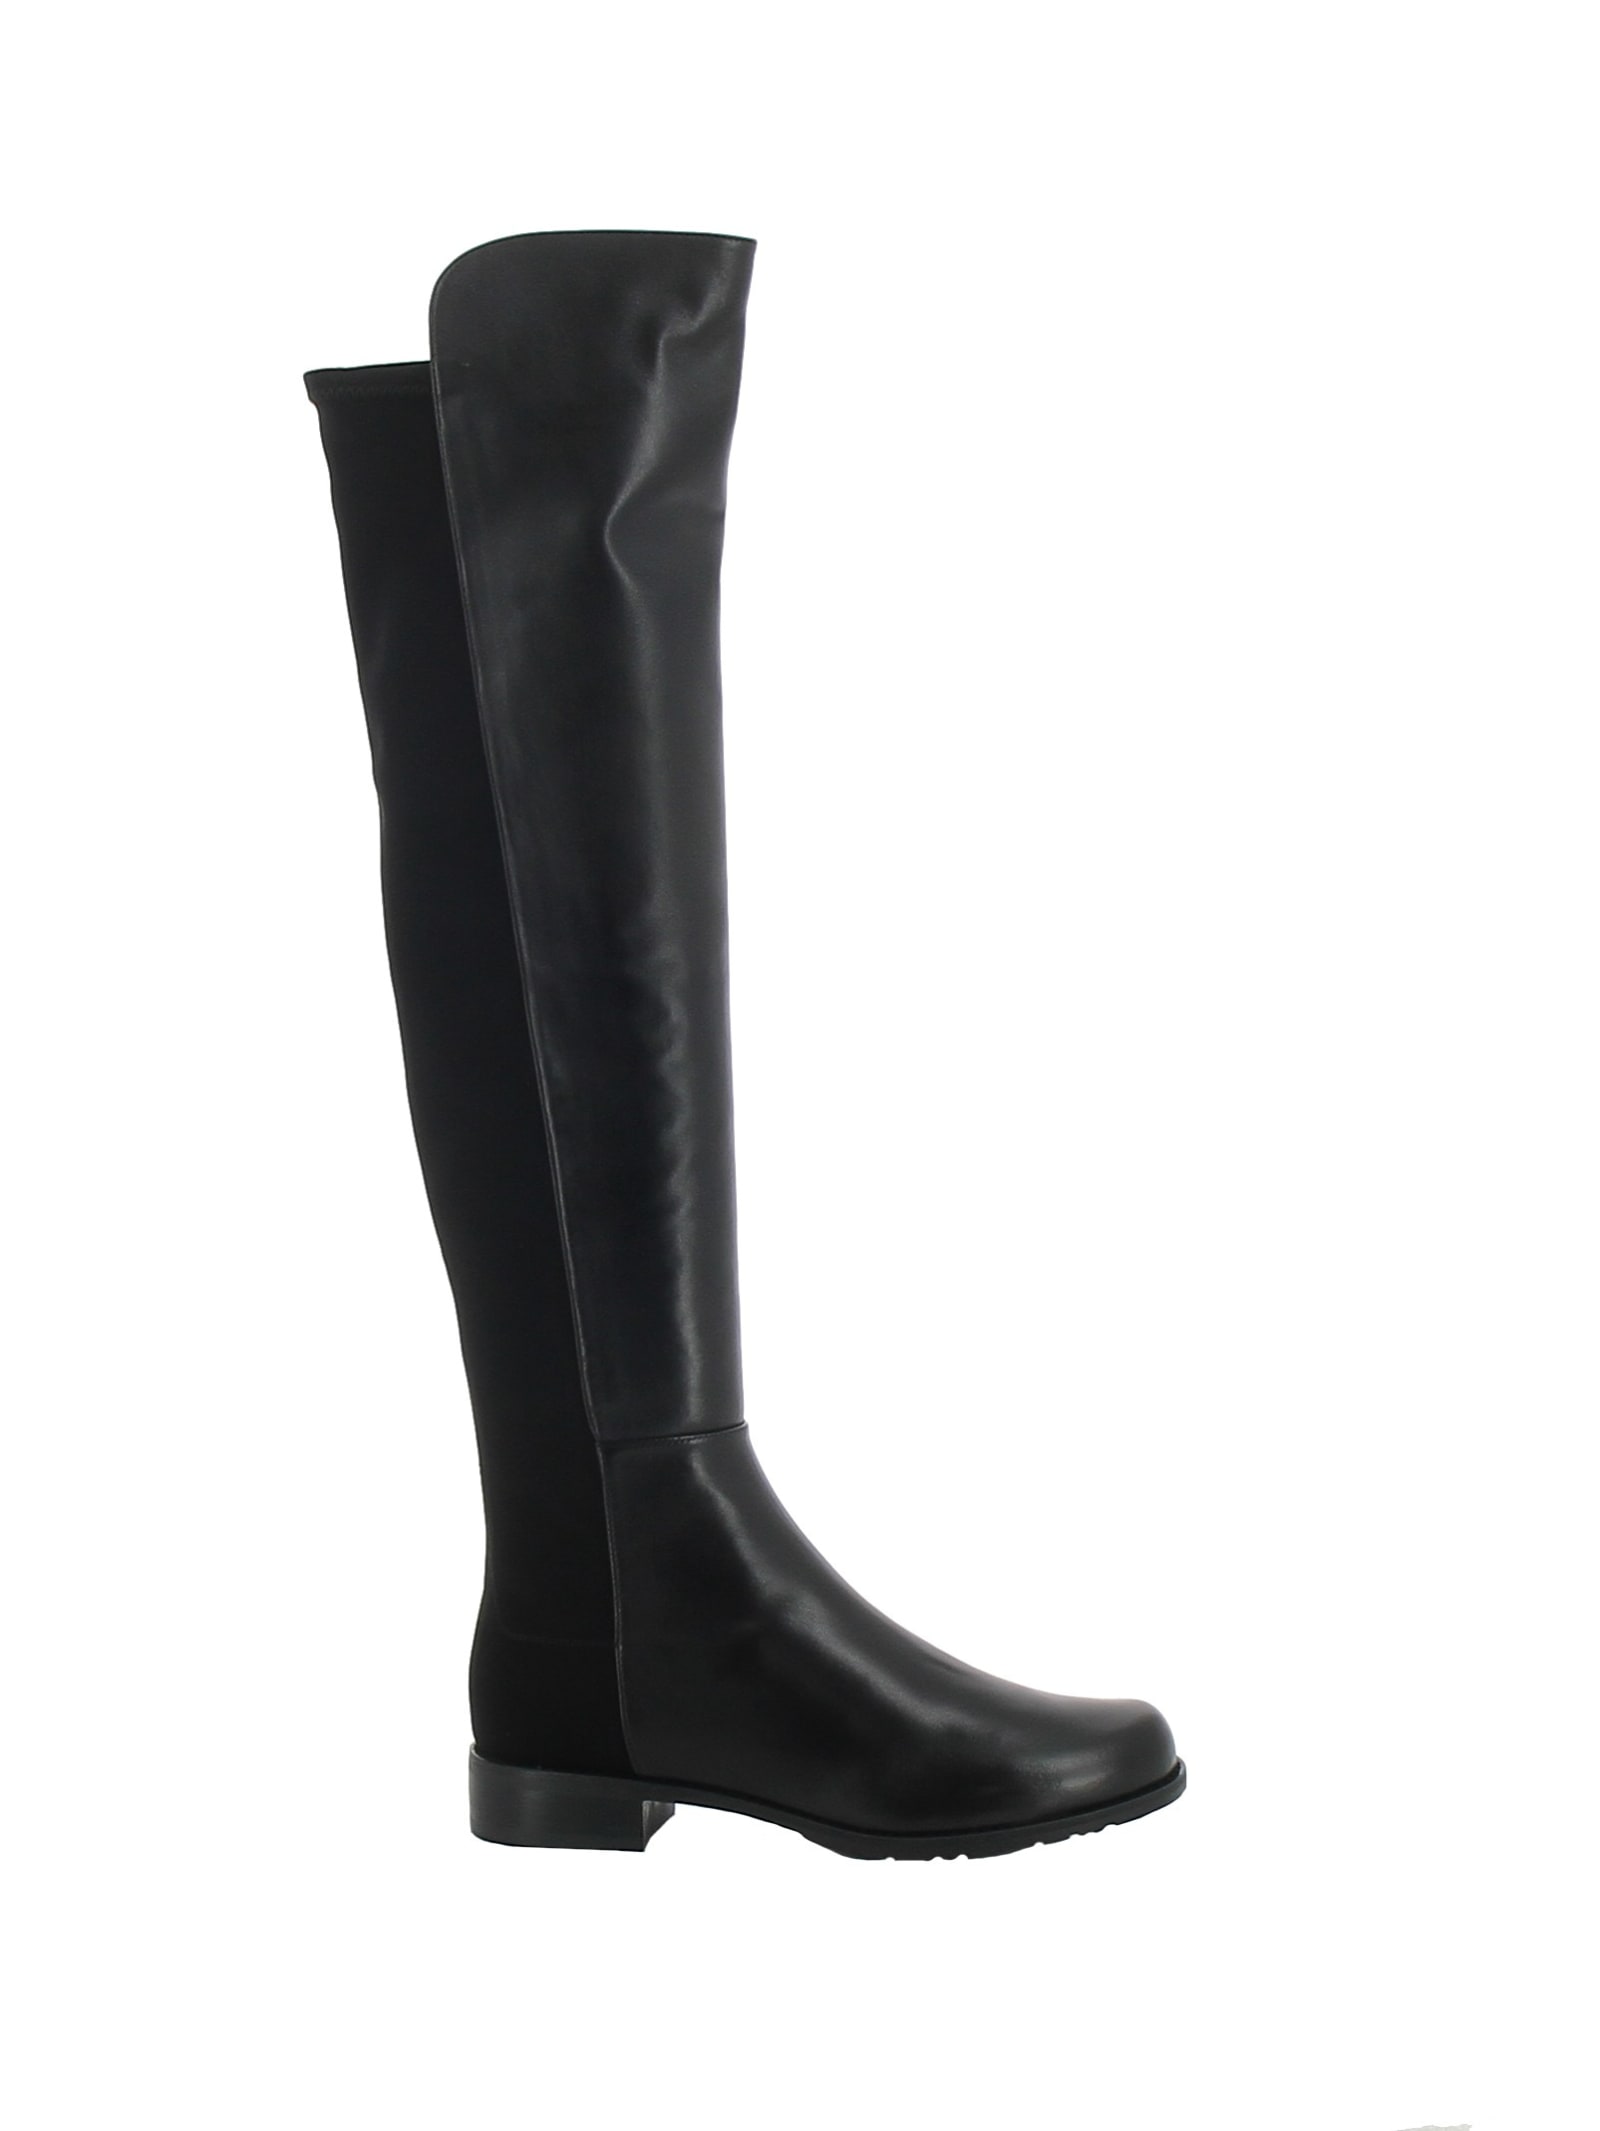 Buy Stuart Weitzman S3999 Black Leather 5050 Boots online, shop Stuart Weitzman shoes with free shipping